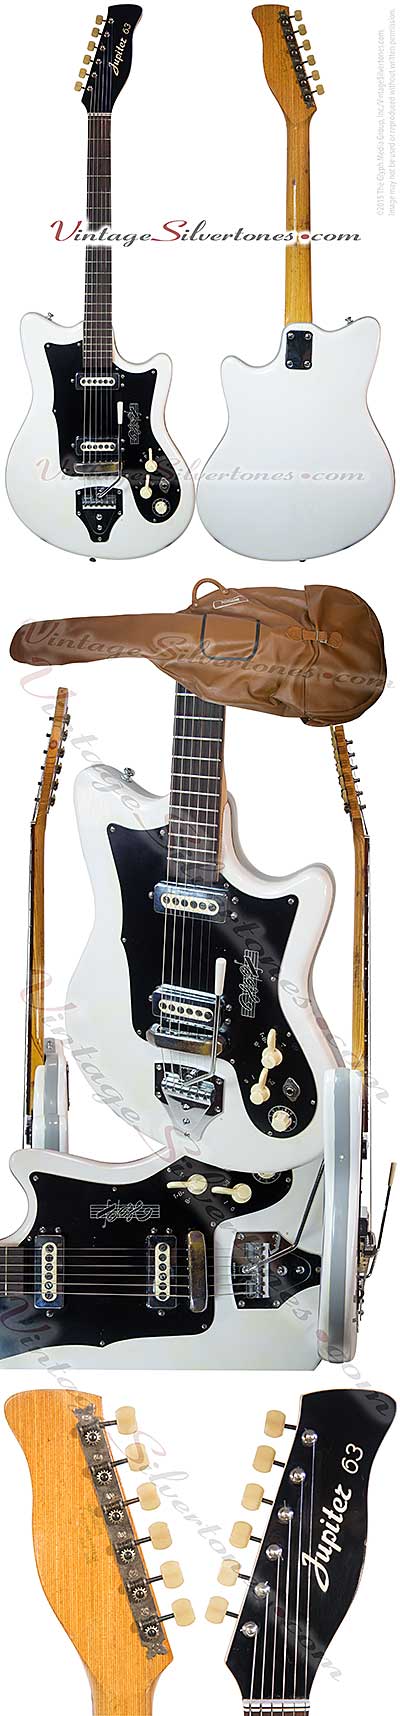 Hopf-Jupiter 63 white plastic hollow body, grey binding, black pickguard, 2 pickup electric guitar